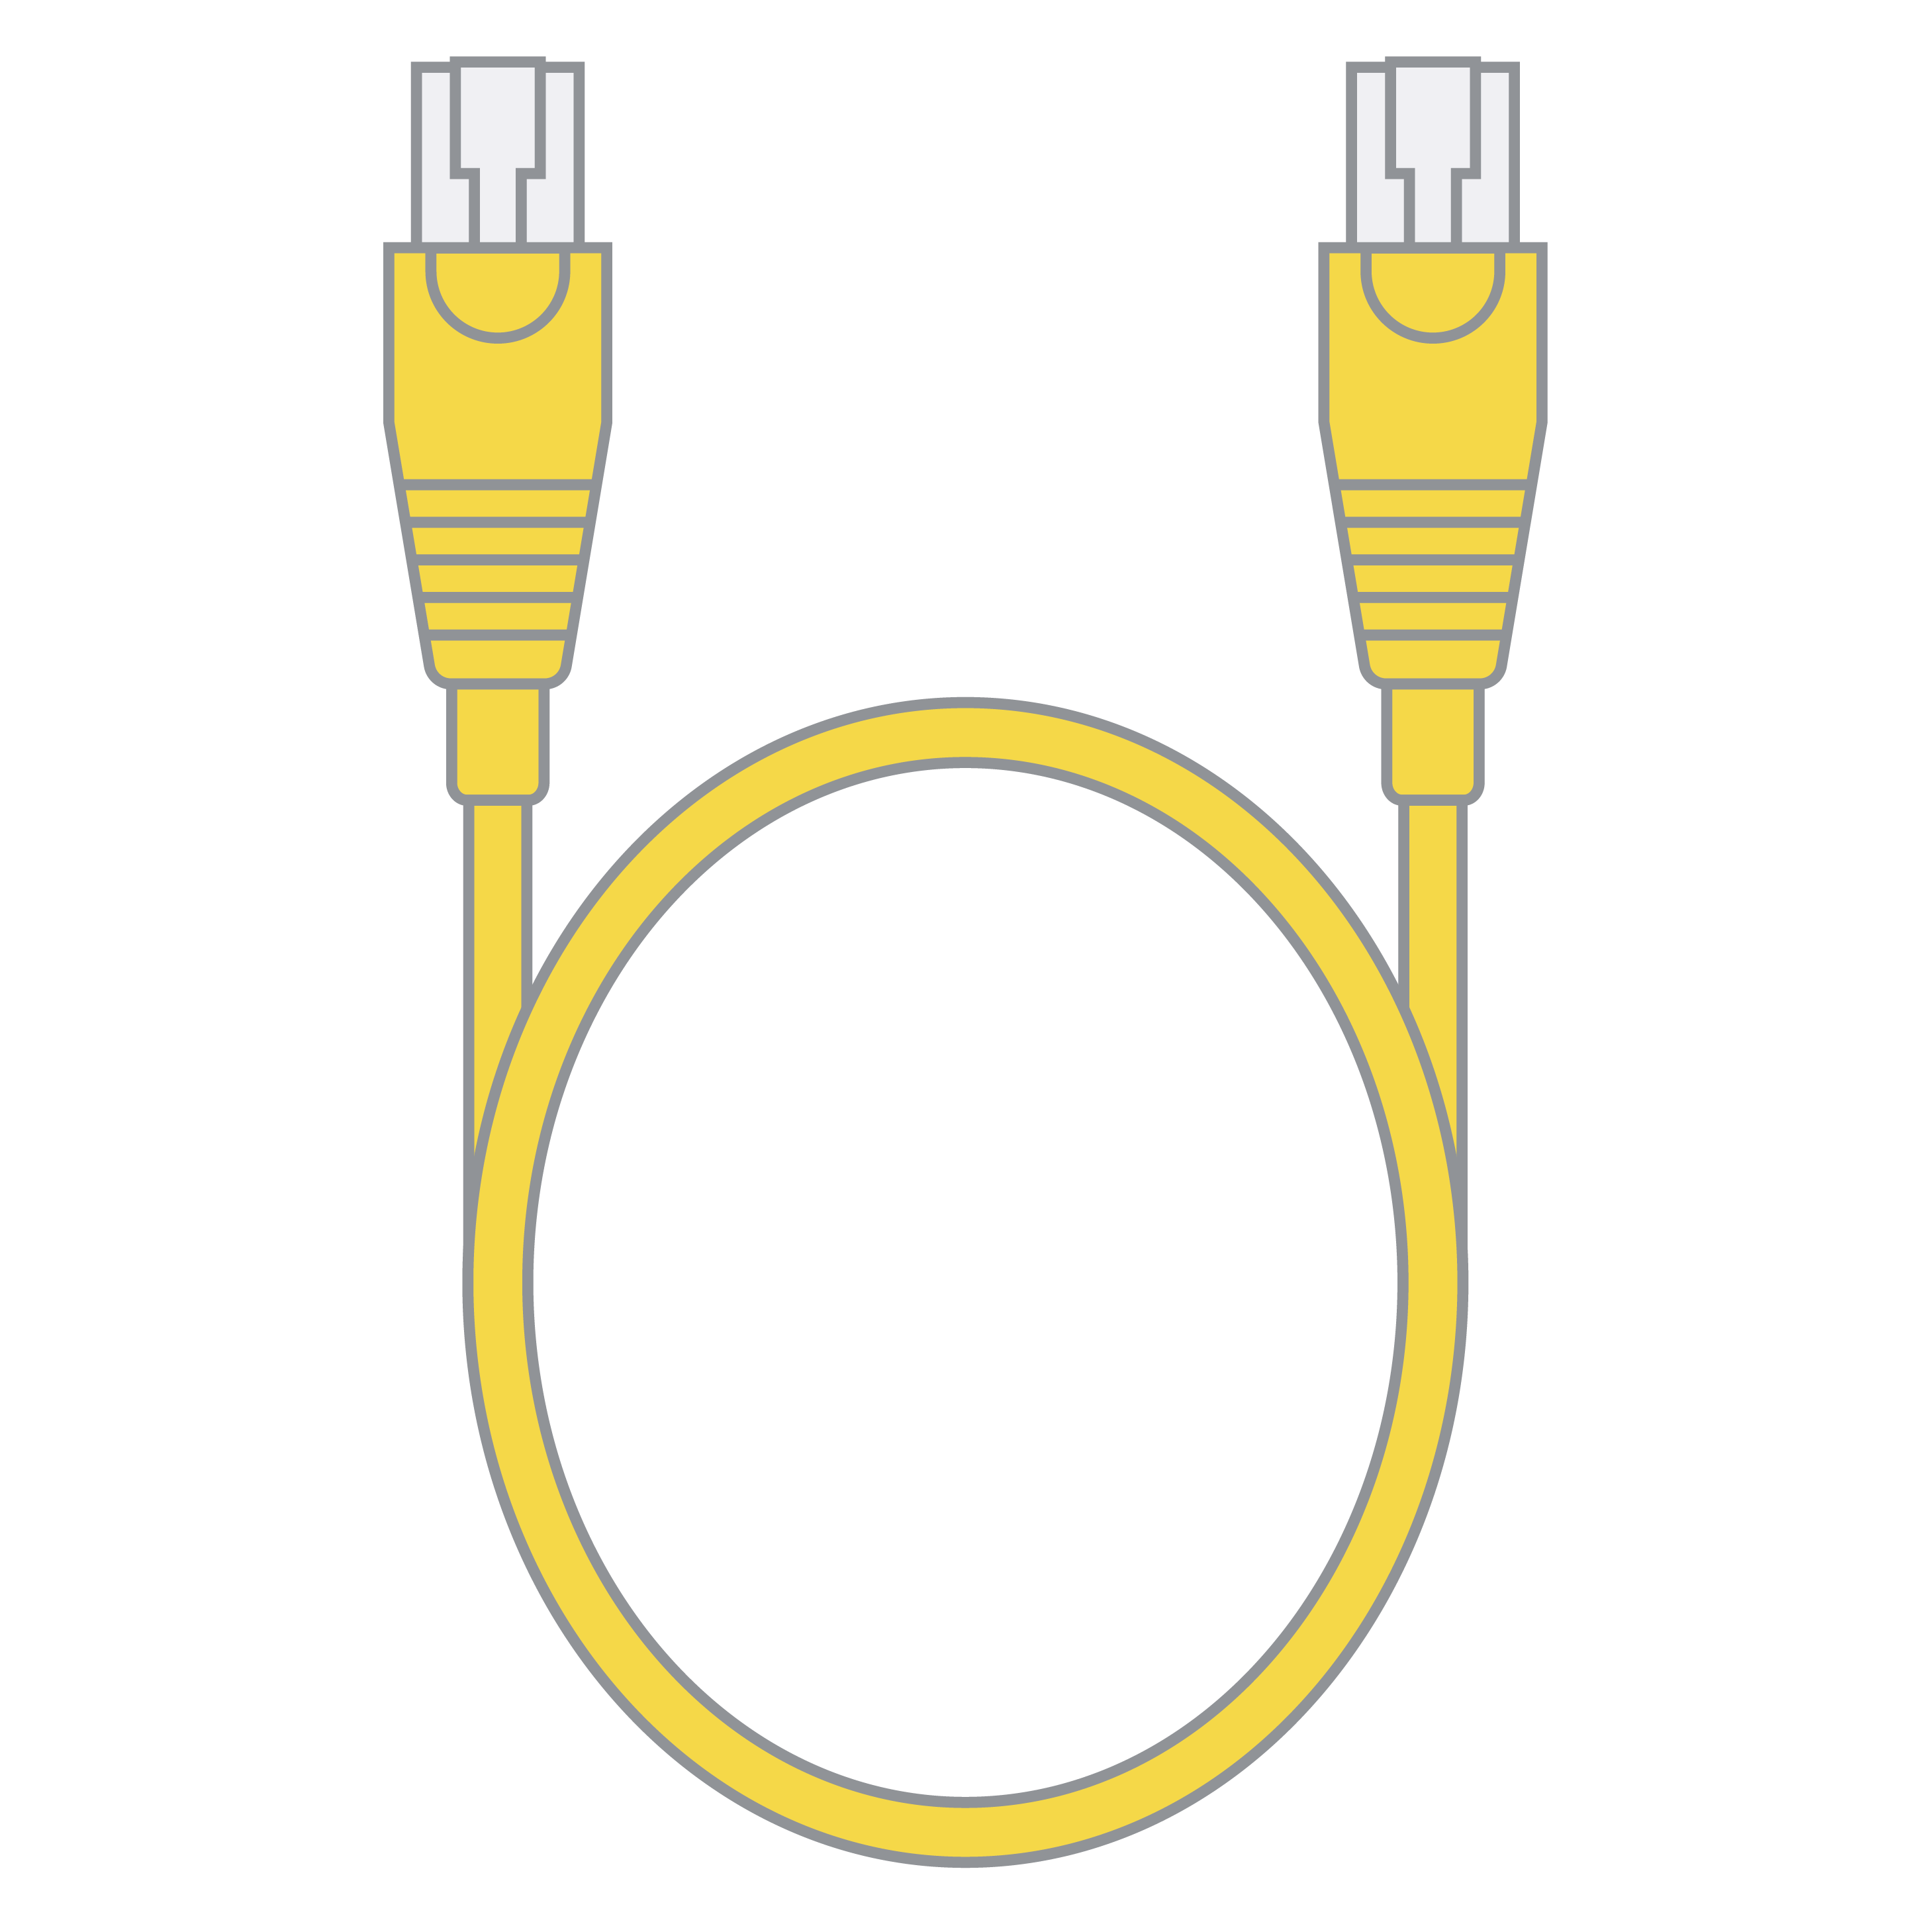 UTP-kabel